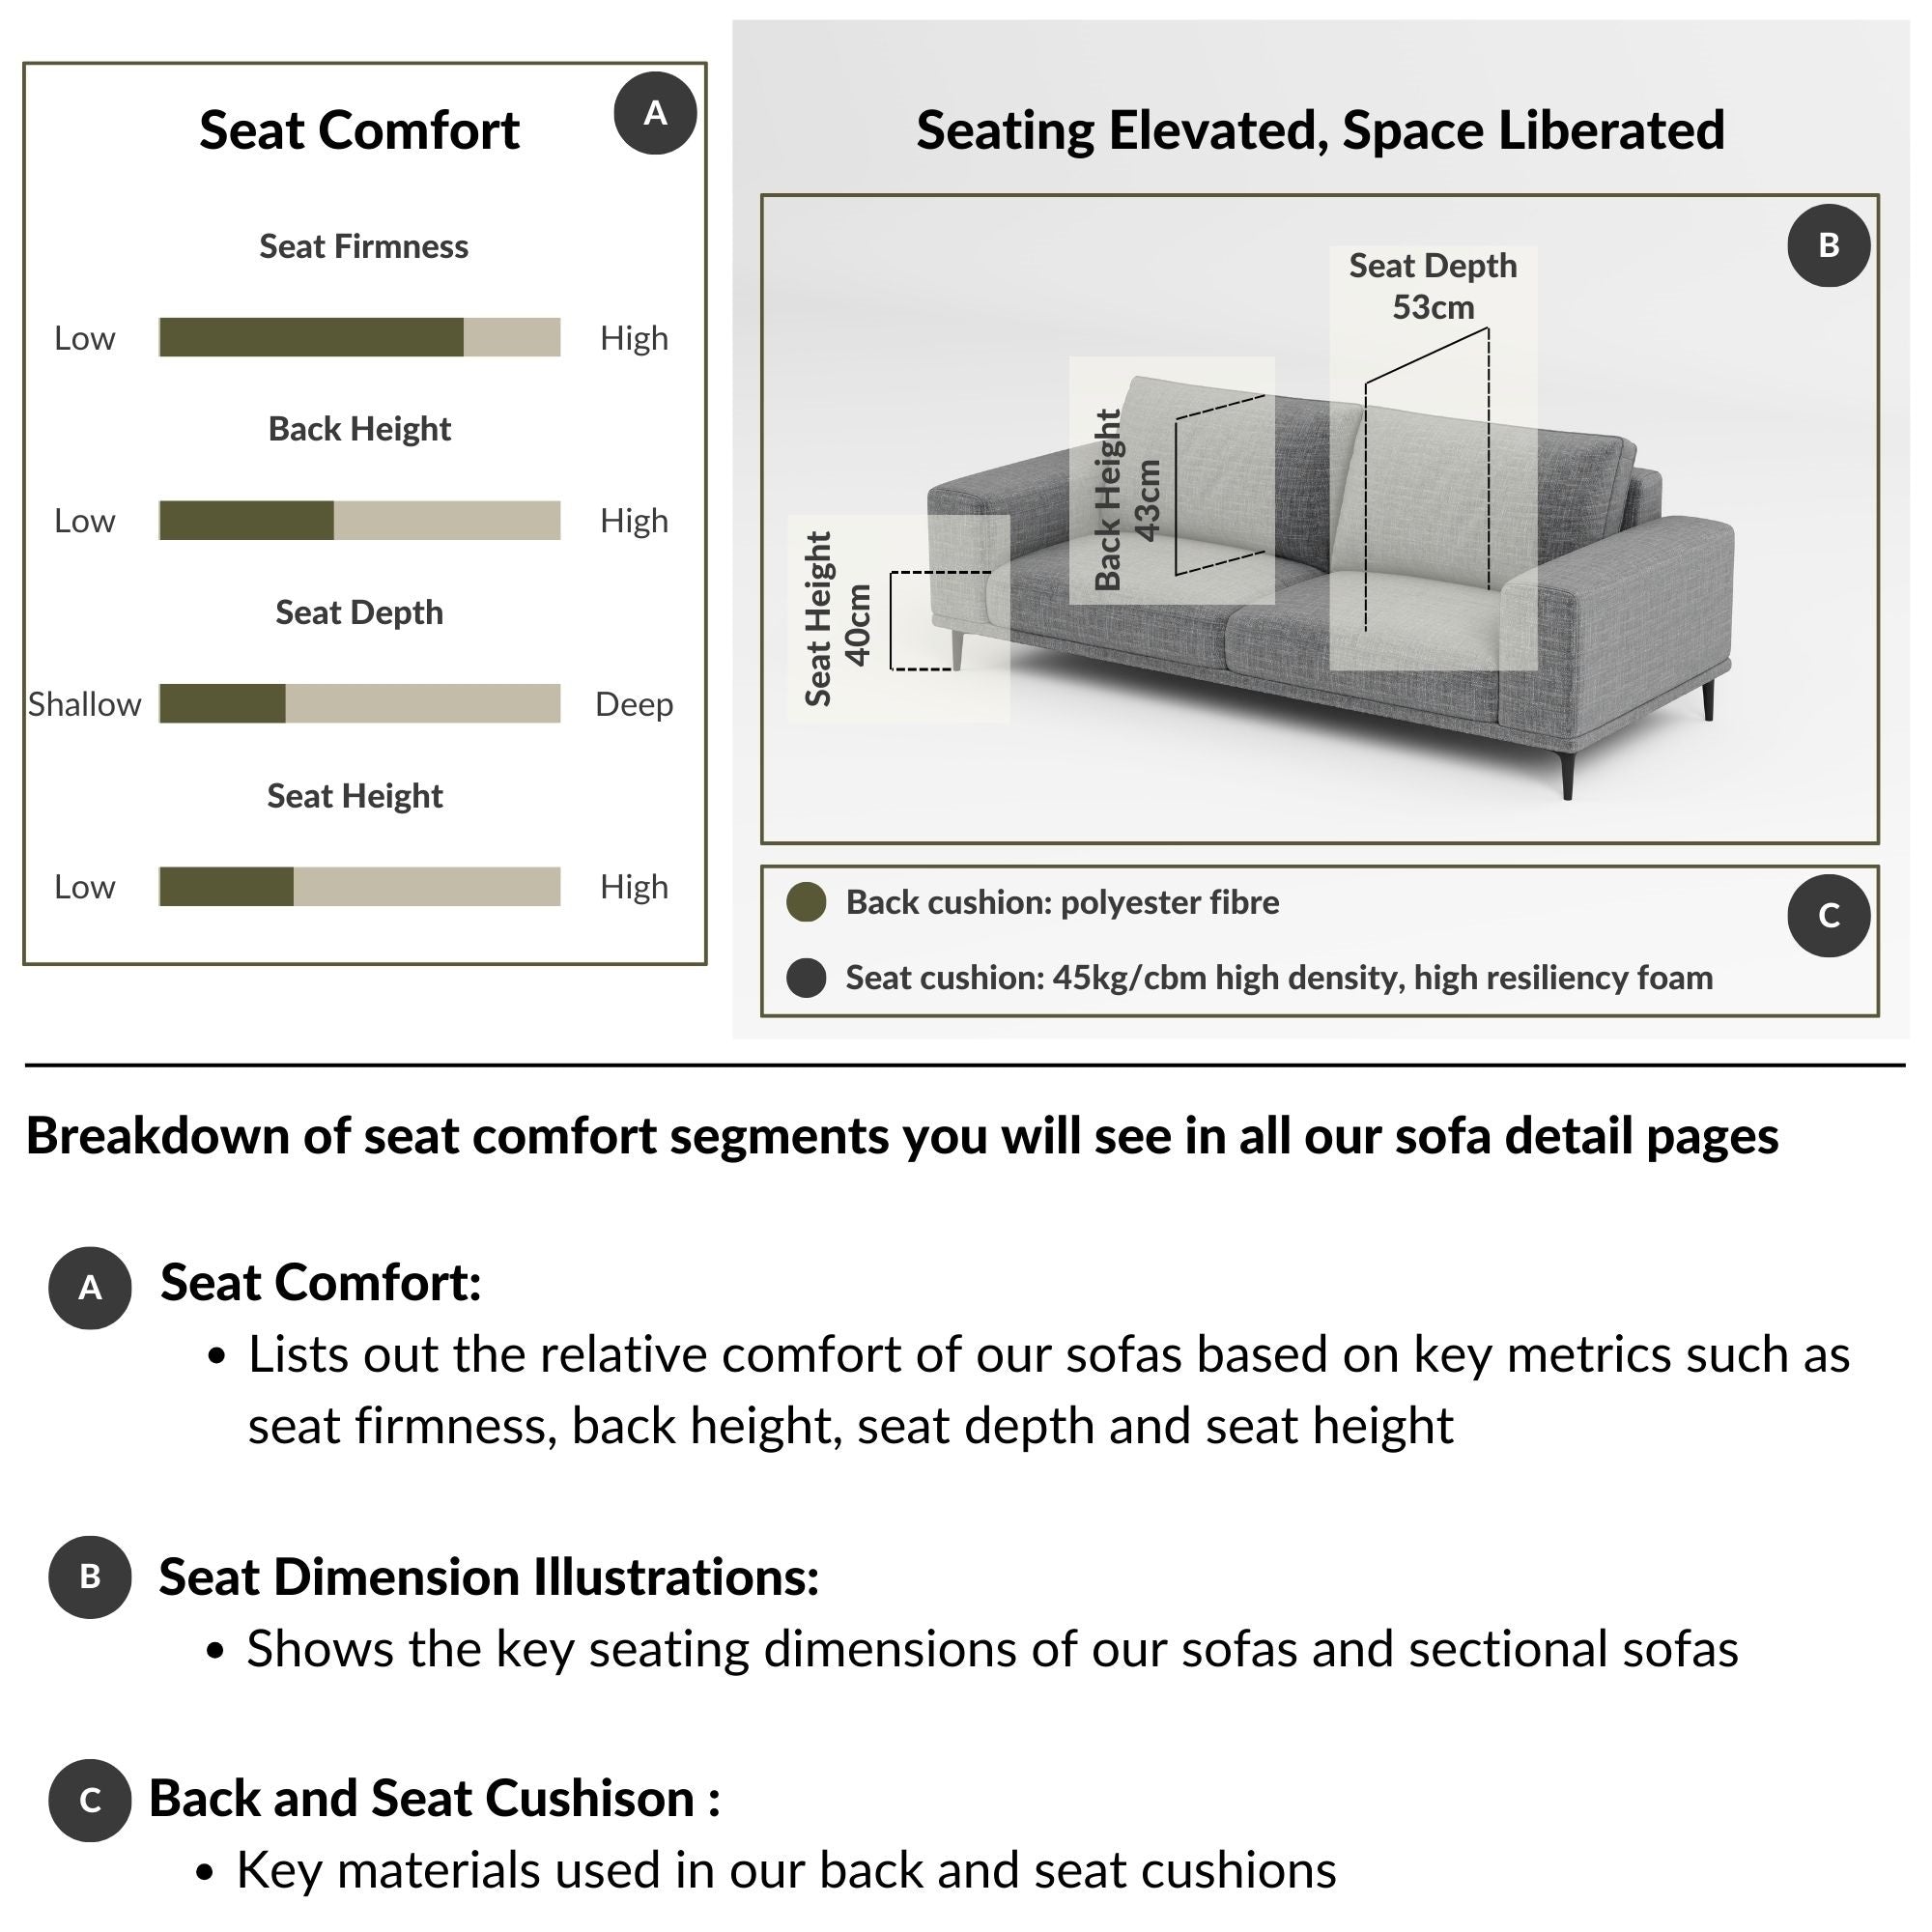 Sample seat comfort illustration